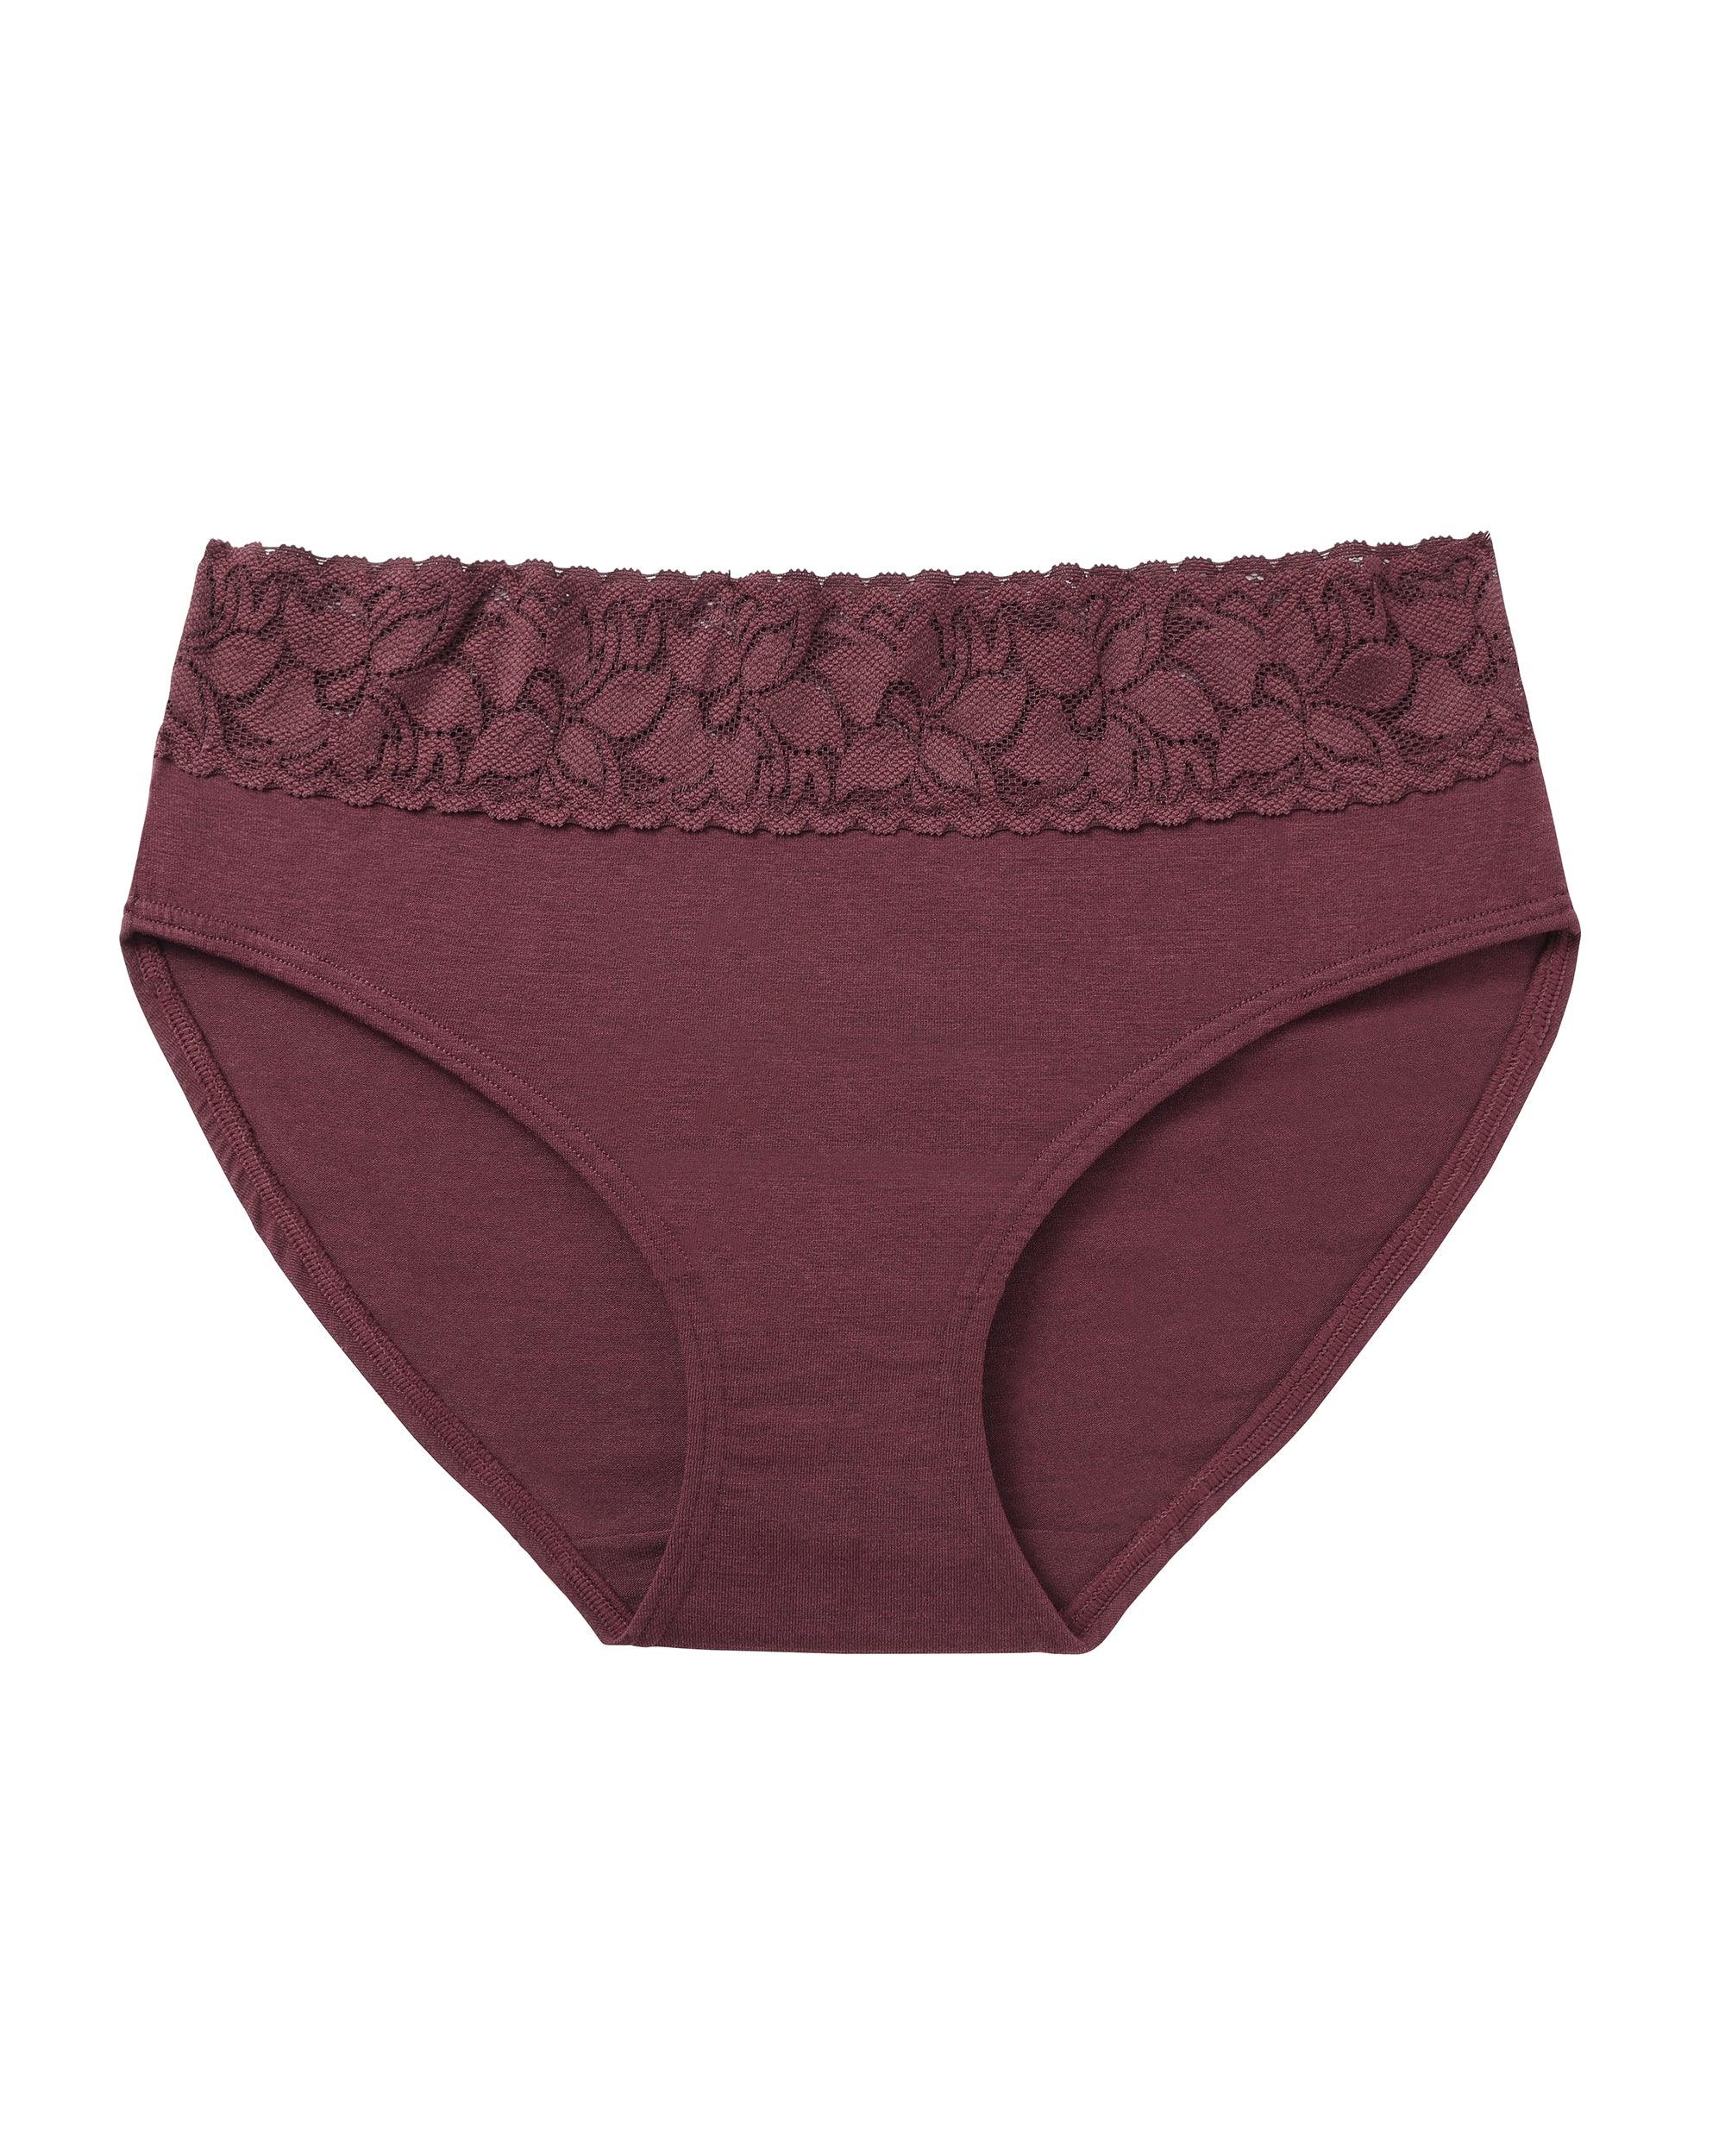 Altheanray Womens Underwear Cotton Briefs Lace Bikini Panties for Women  Undies Hipster Stretch